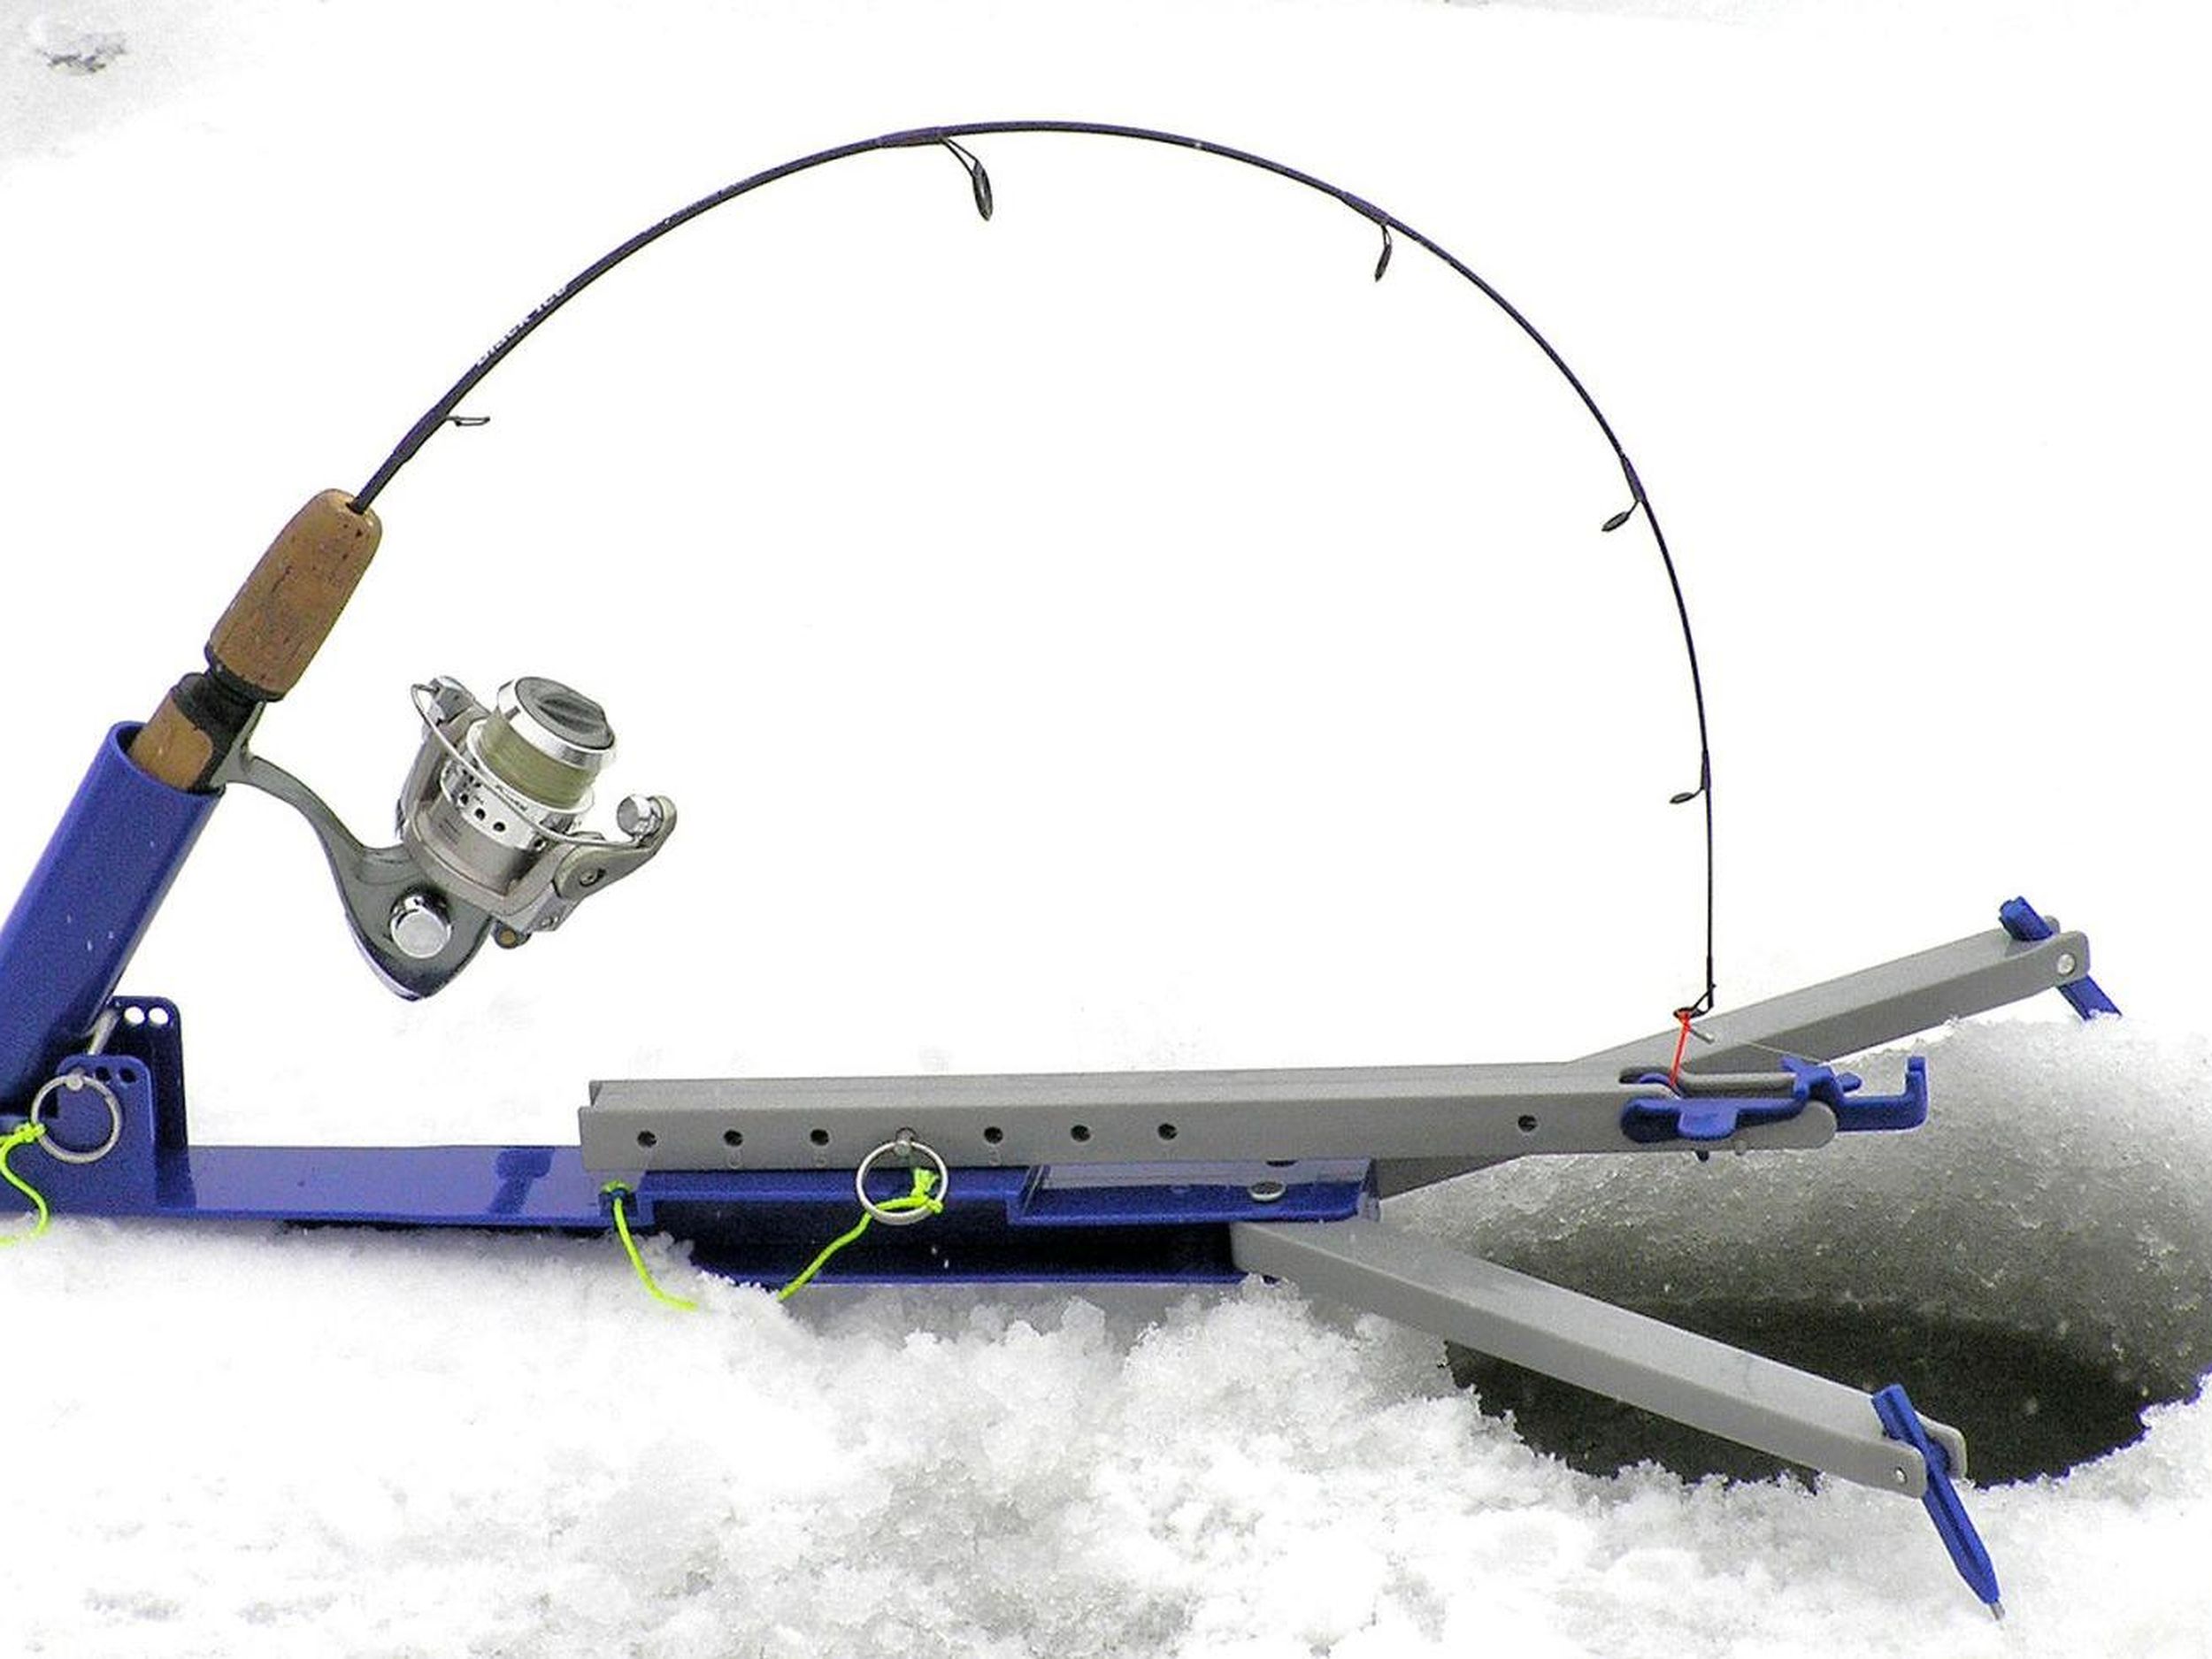 Idaho nurse manufactures popular ice-fishing device for setting